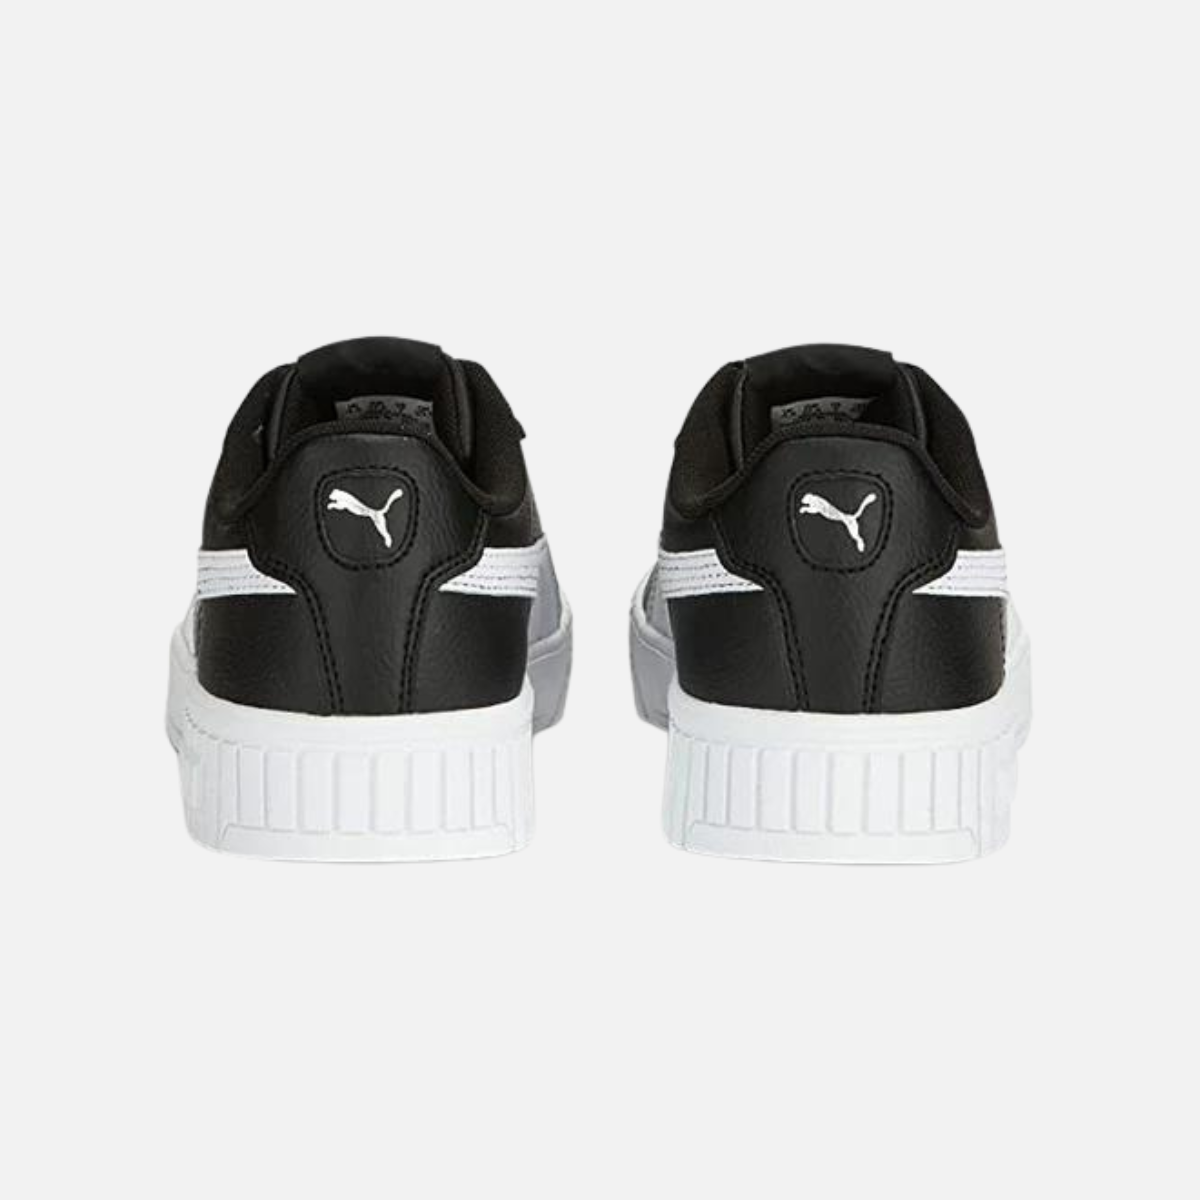 Puma Carina 2.0 Sneakers Women's Lifestyle Shoes - Black/White/Silver